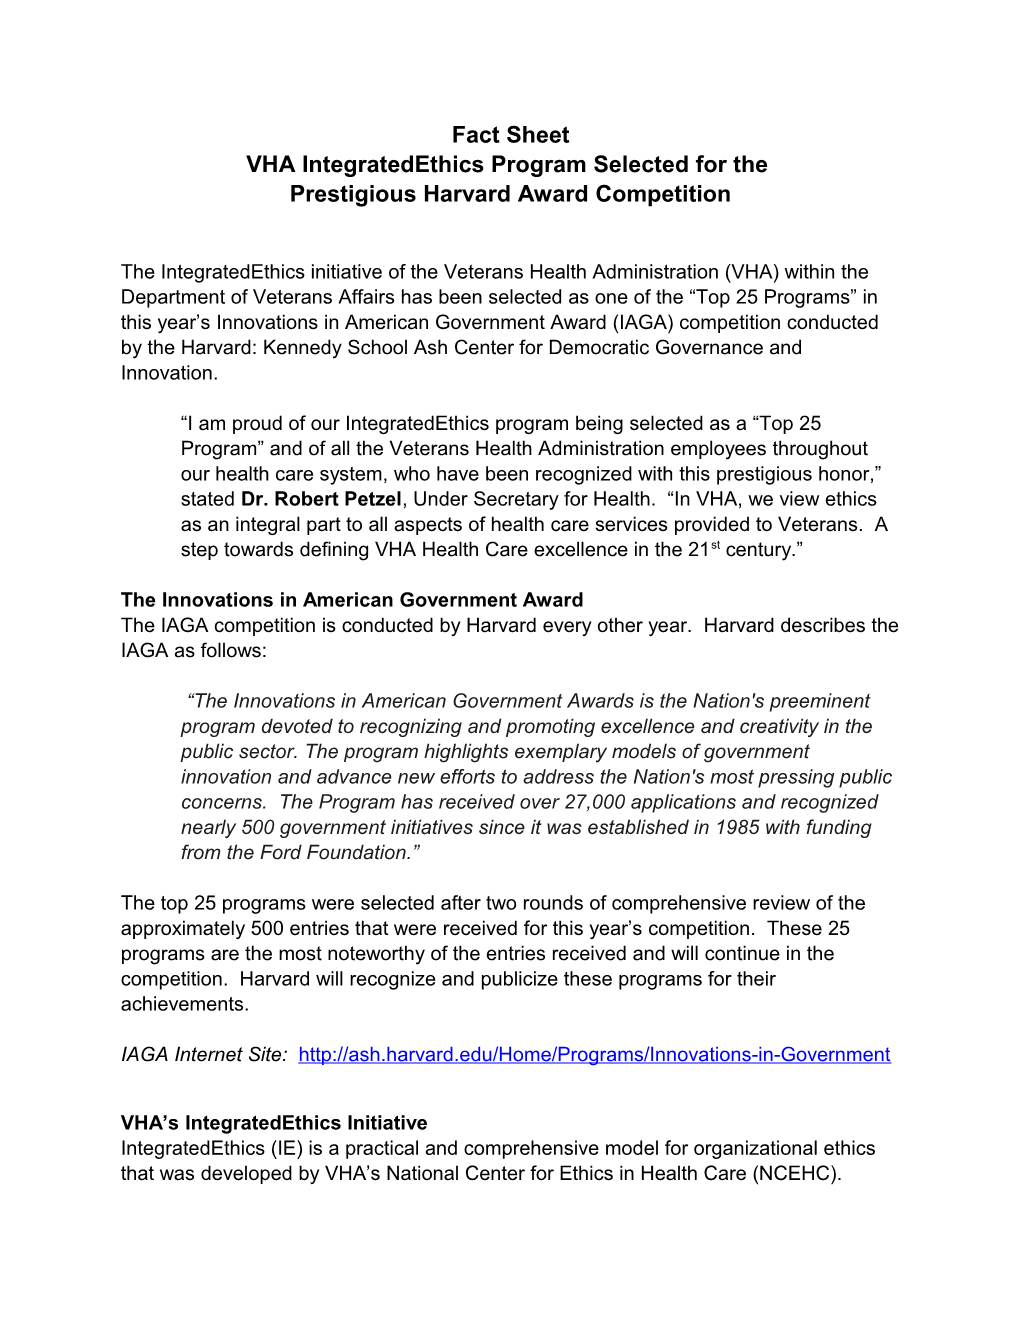 VHA's Integratedethics Program Receives Prestigious Harvard Award - US Department of Veterans